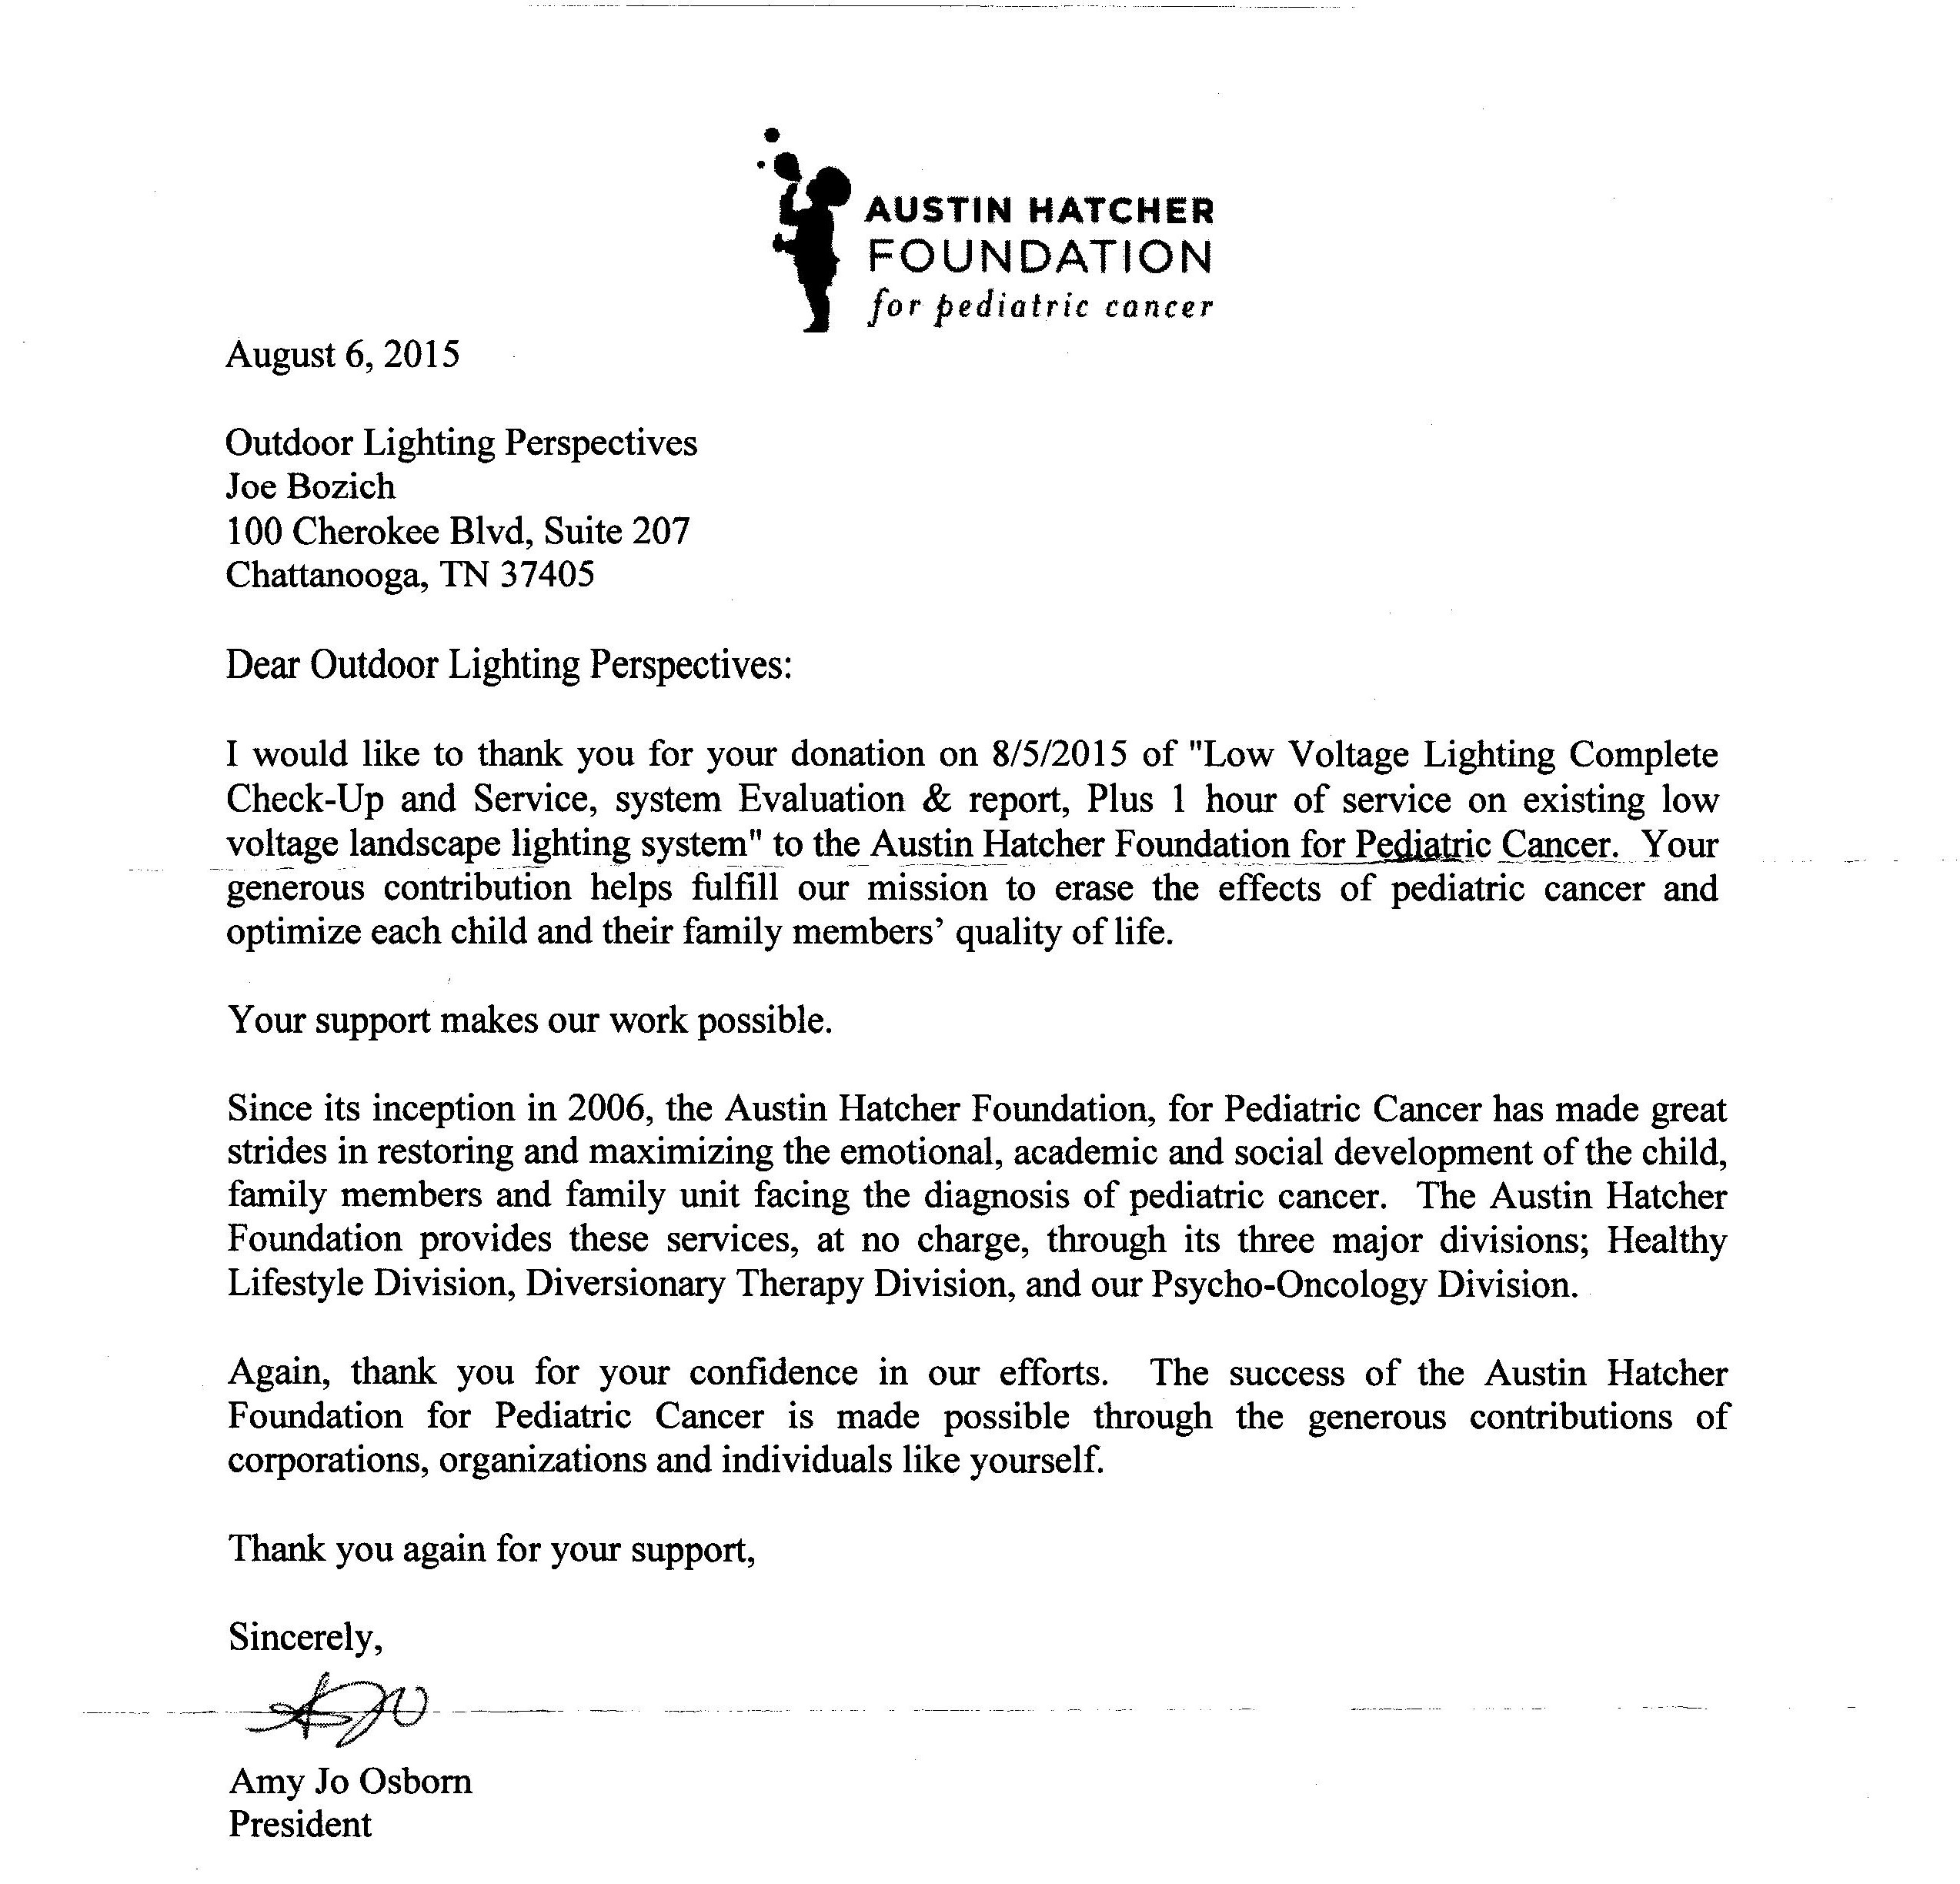 Austin Hatcher Foundation for Pediatric Cancer Contribution Letter